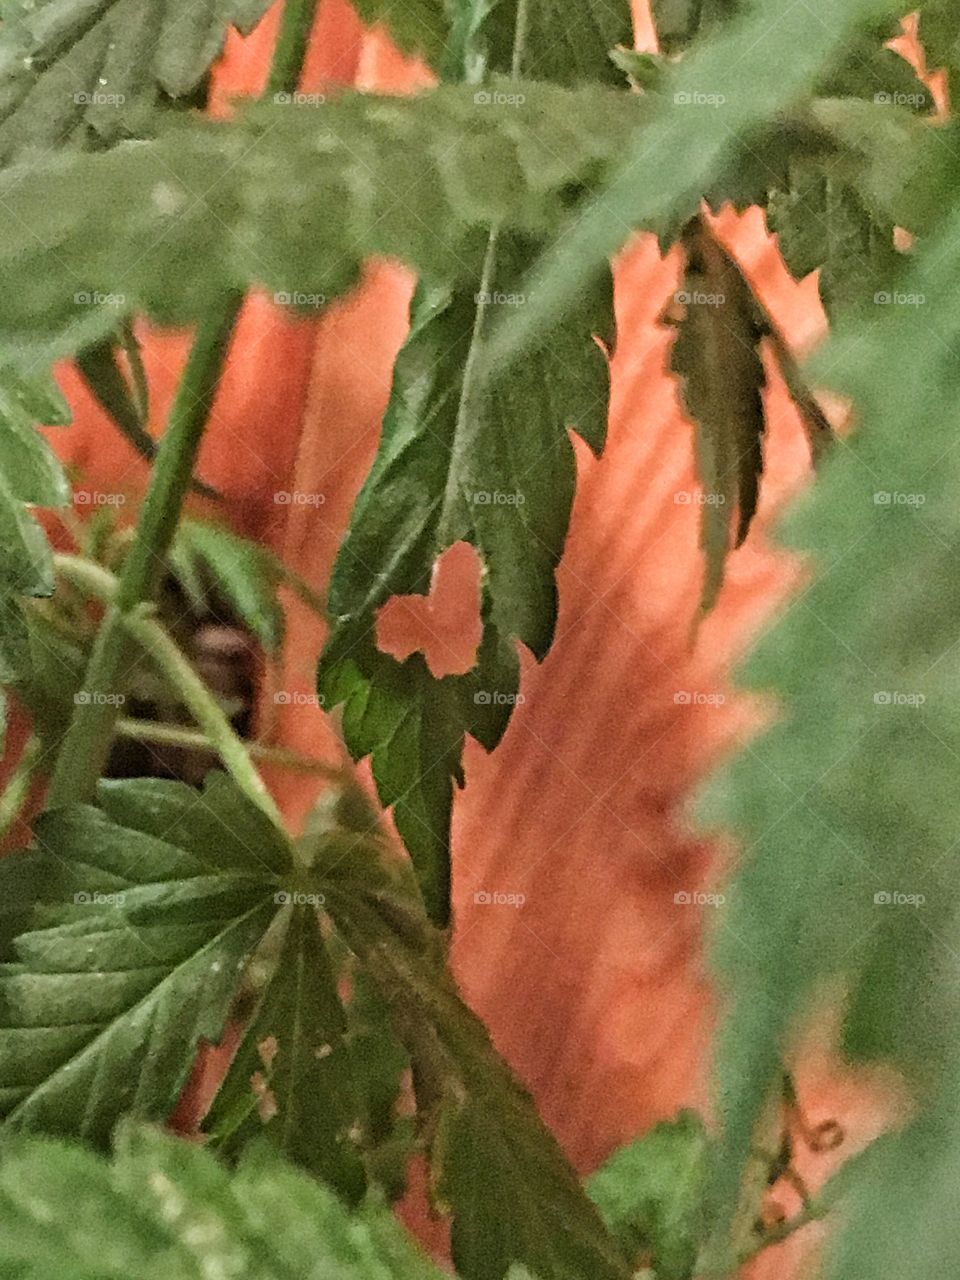 Heart in leaf